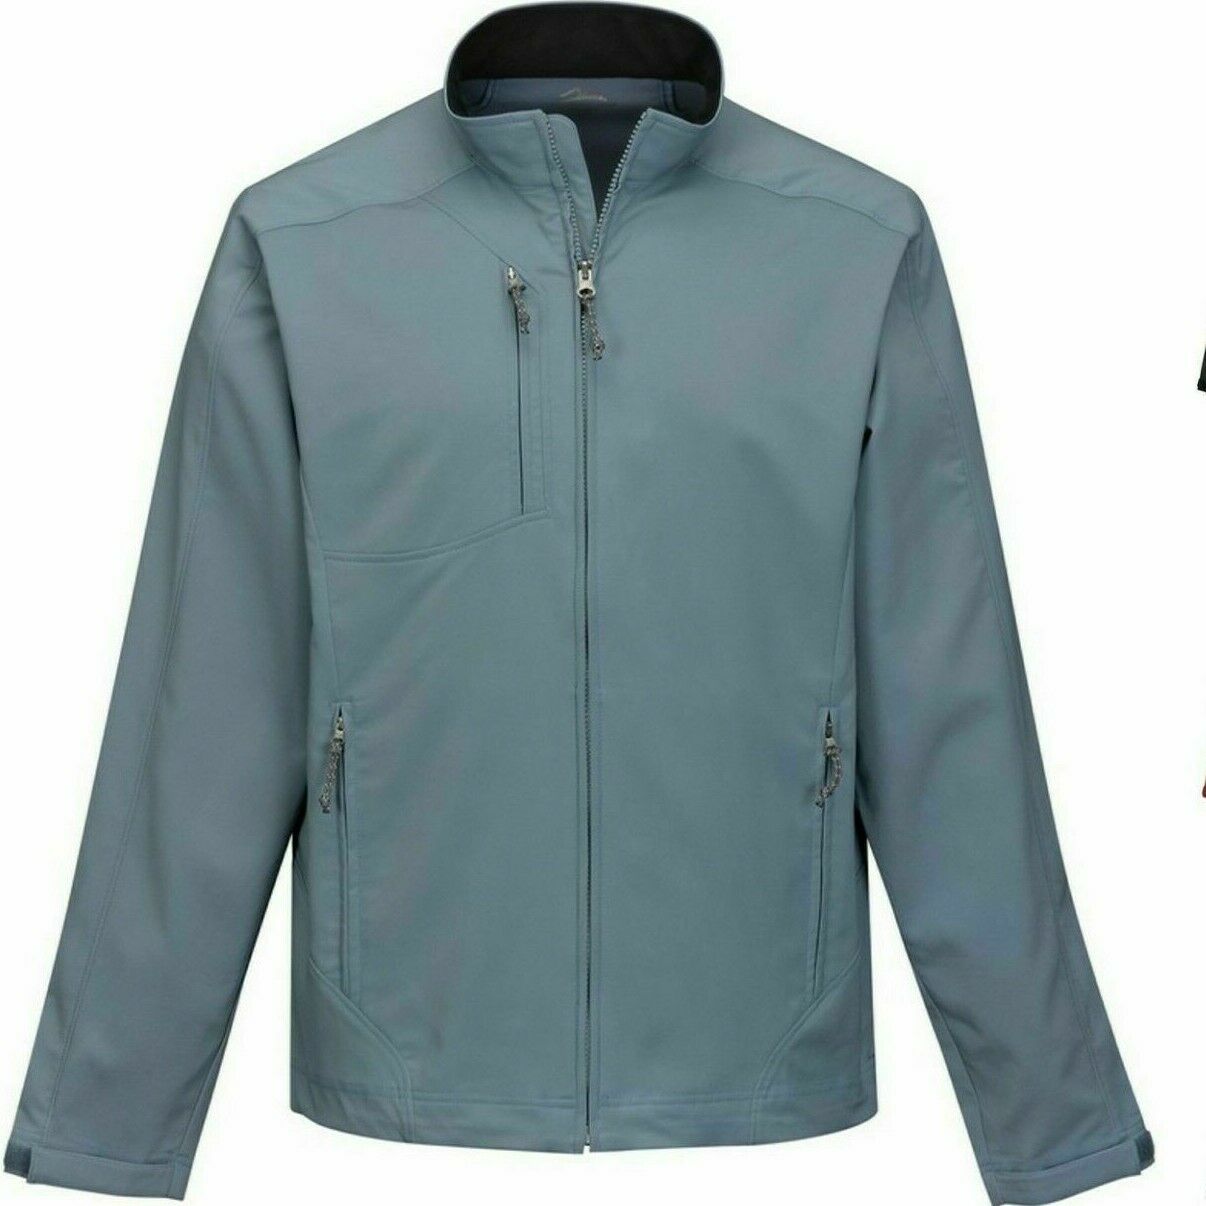 MENS JACKET Wind Breaker Casual jacket-Adjustable Cuff Pockets Tri-Mountain